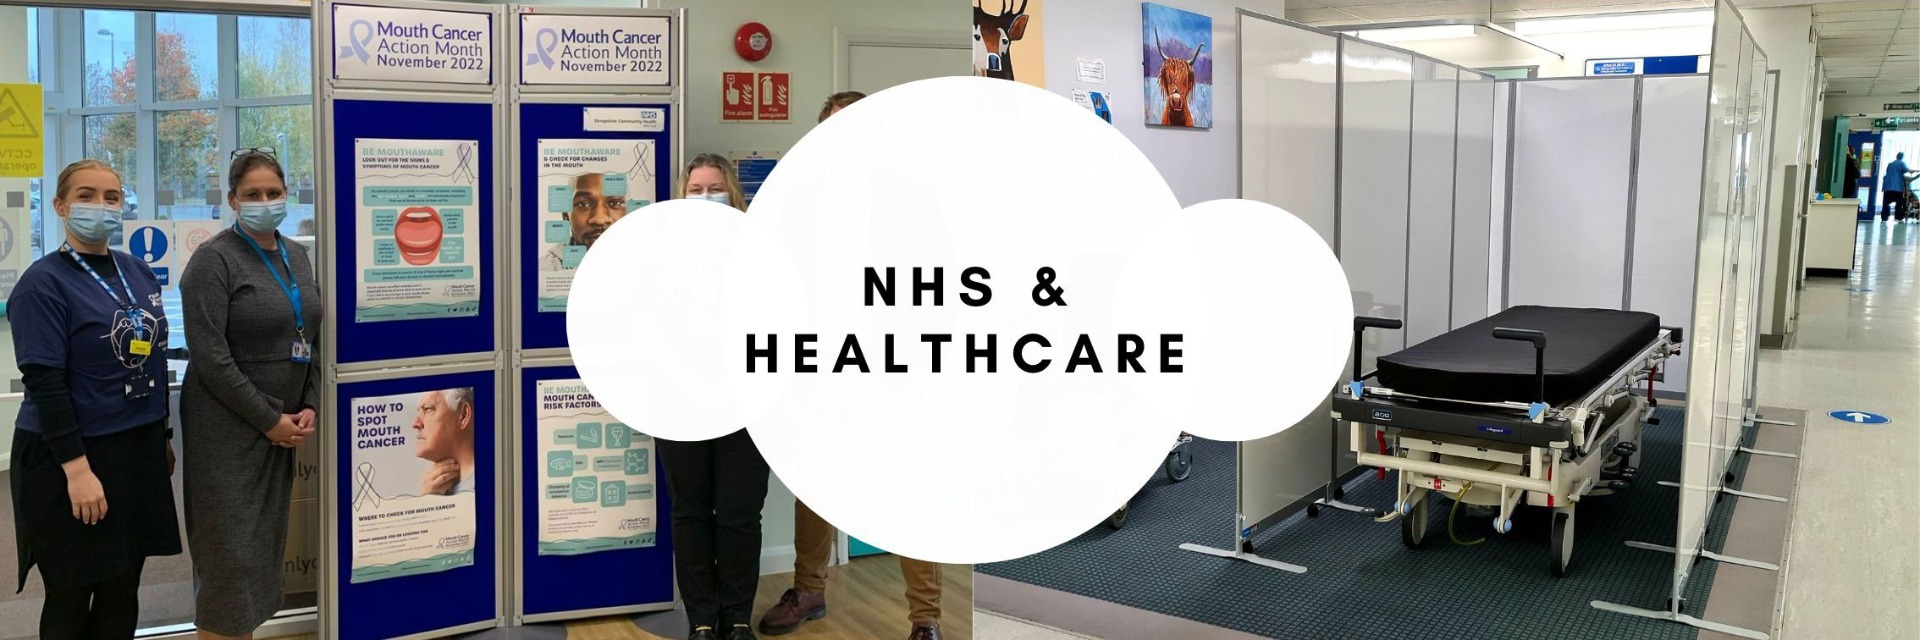 NHS medical Screens & Display boards